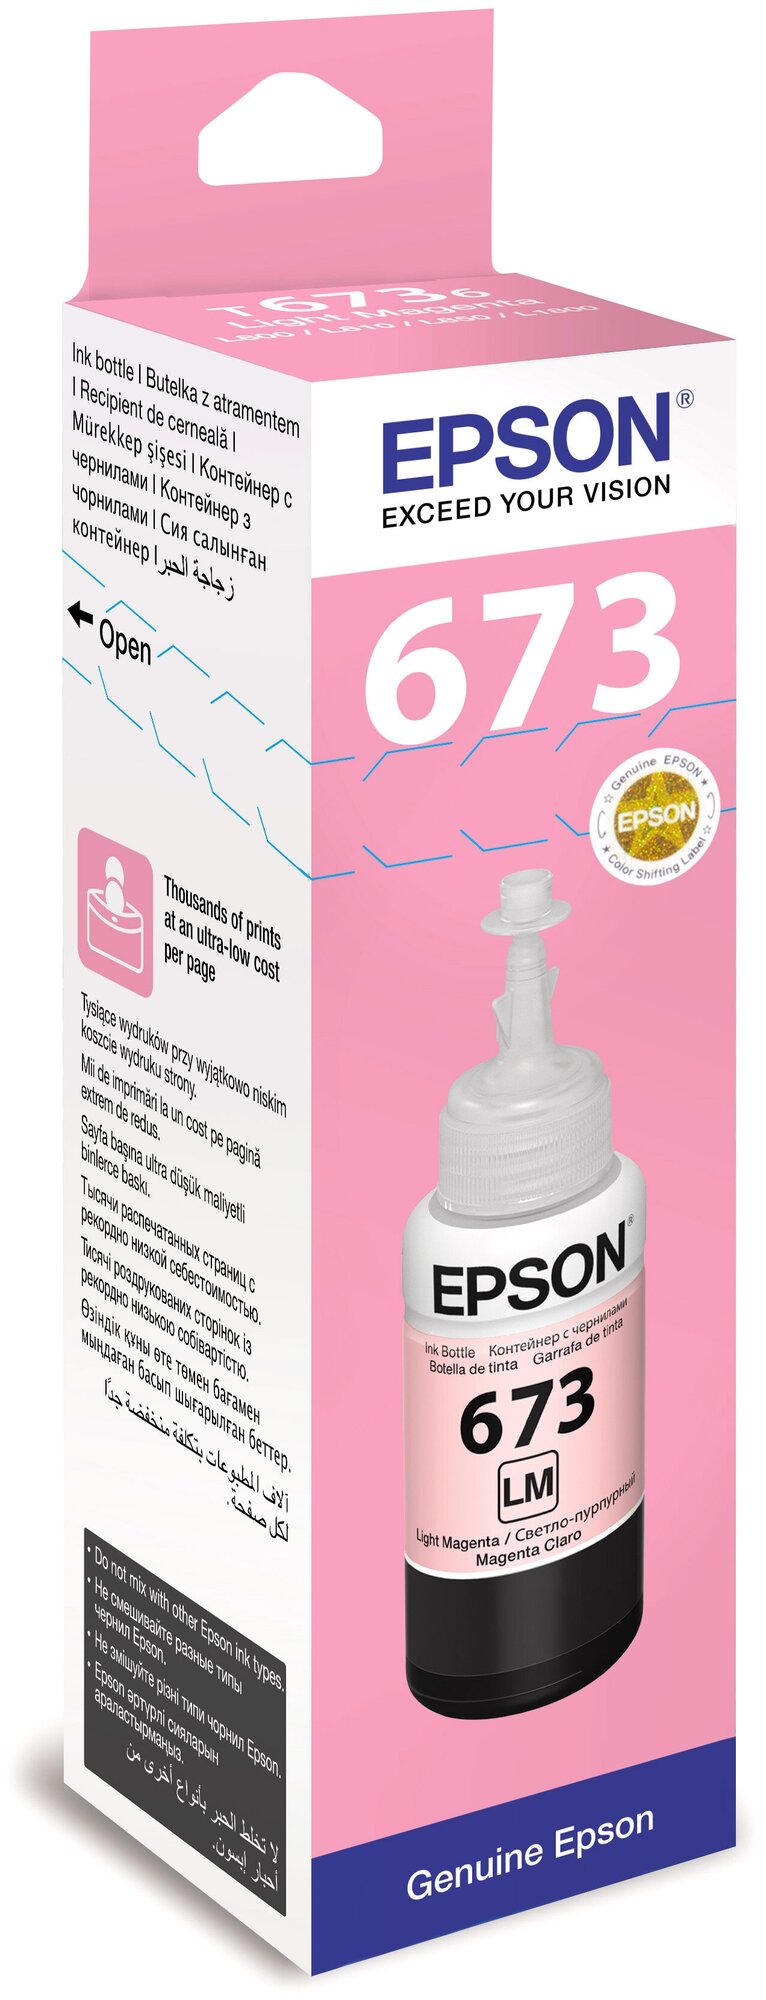 Чернила Epson для L800 70 мл (светло-пурпурный)